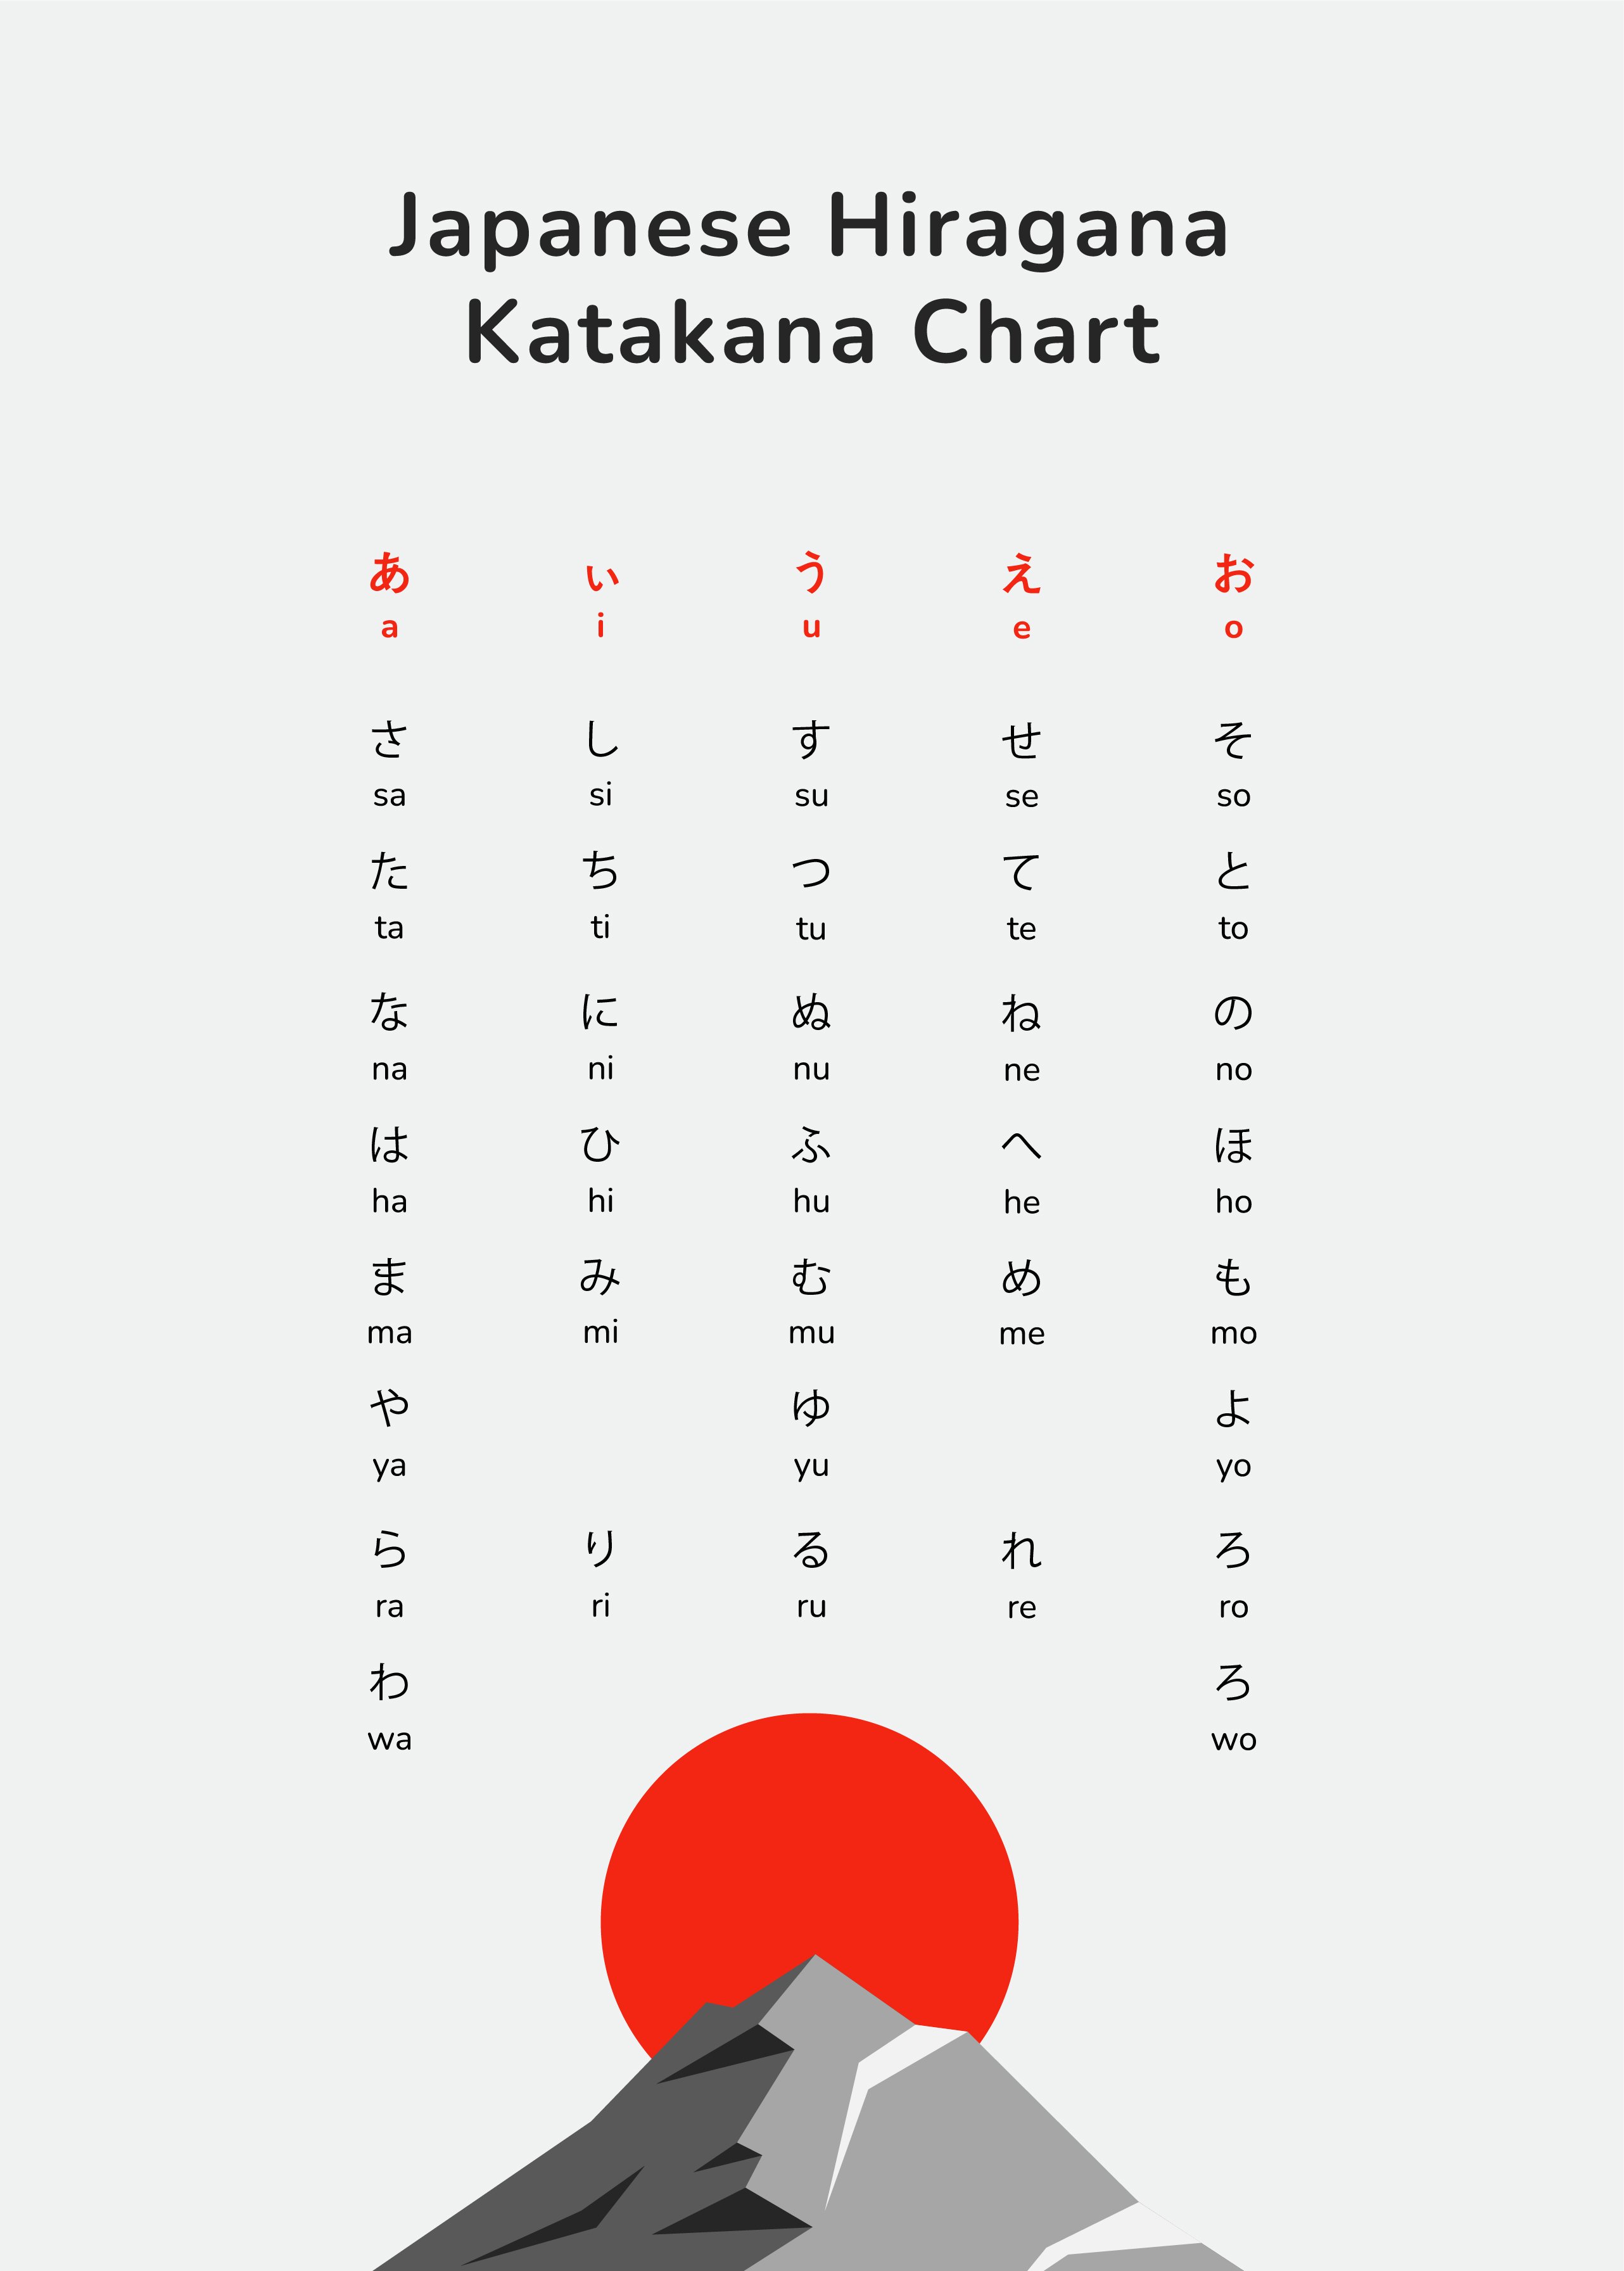 Katakana Chart Pdf Illustrator | Images and Photos finder